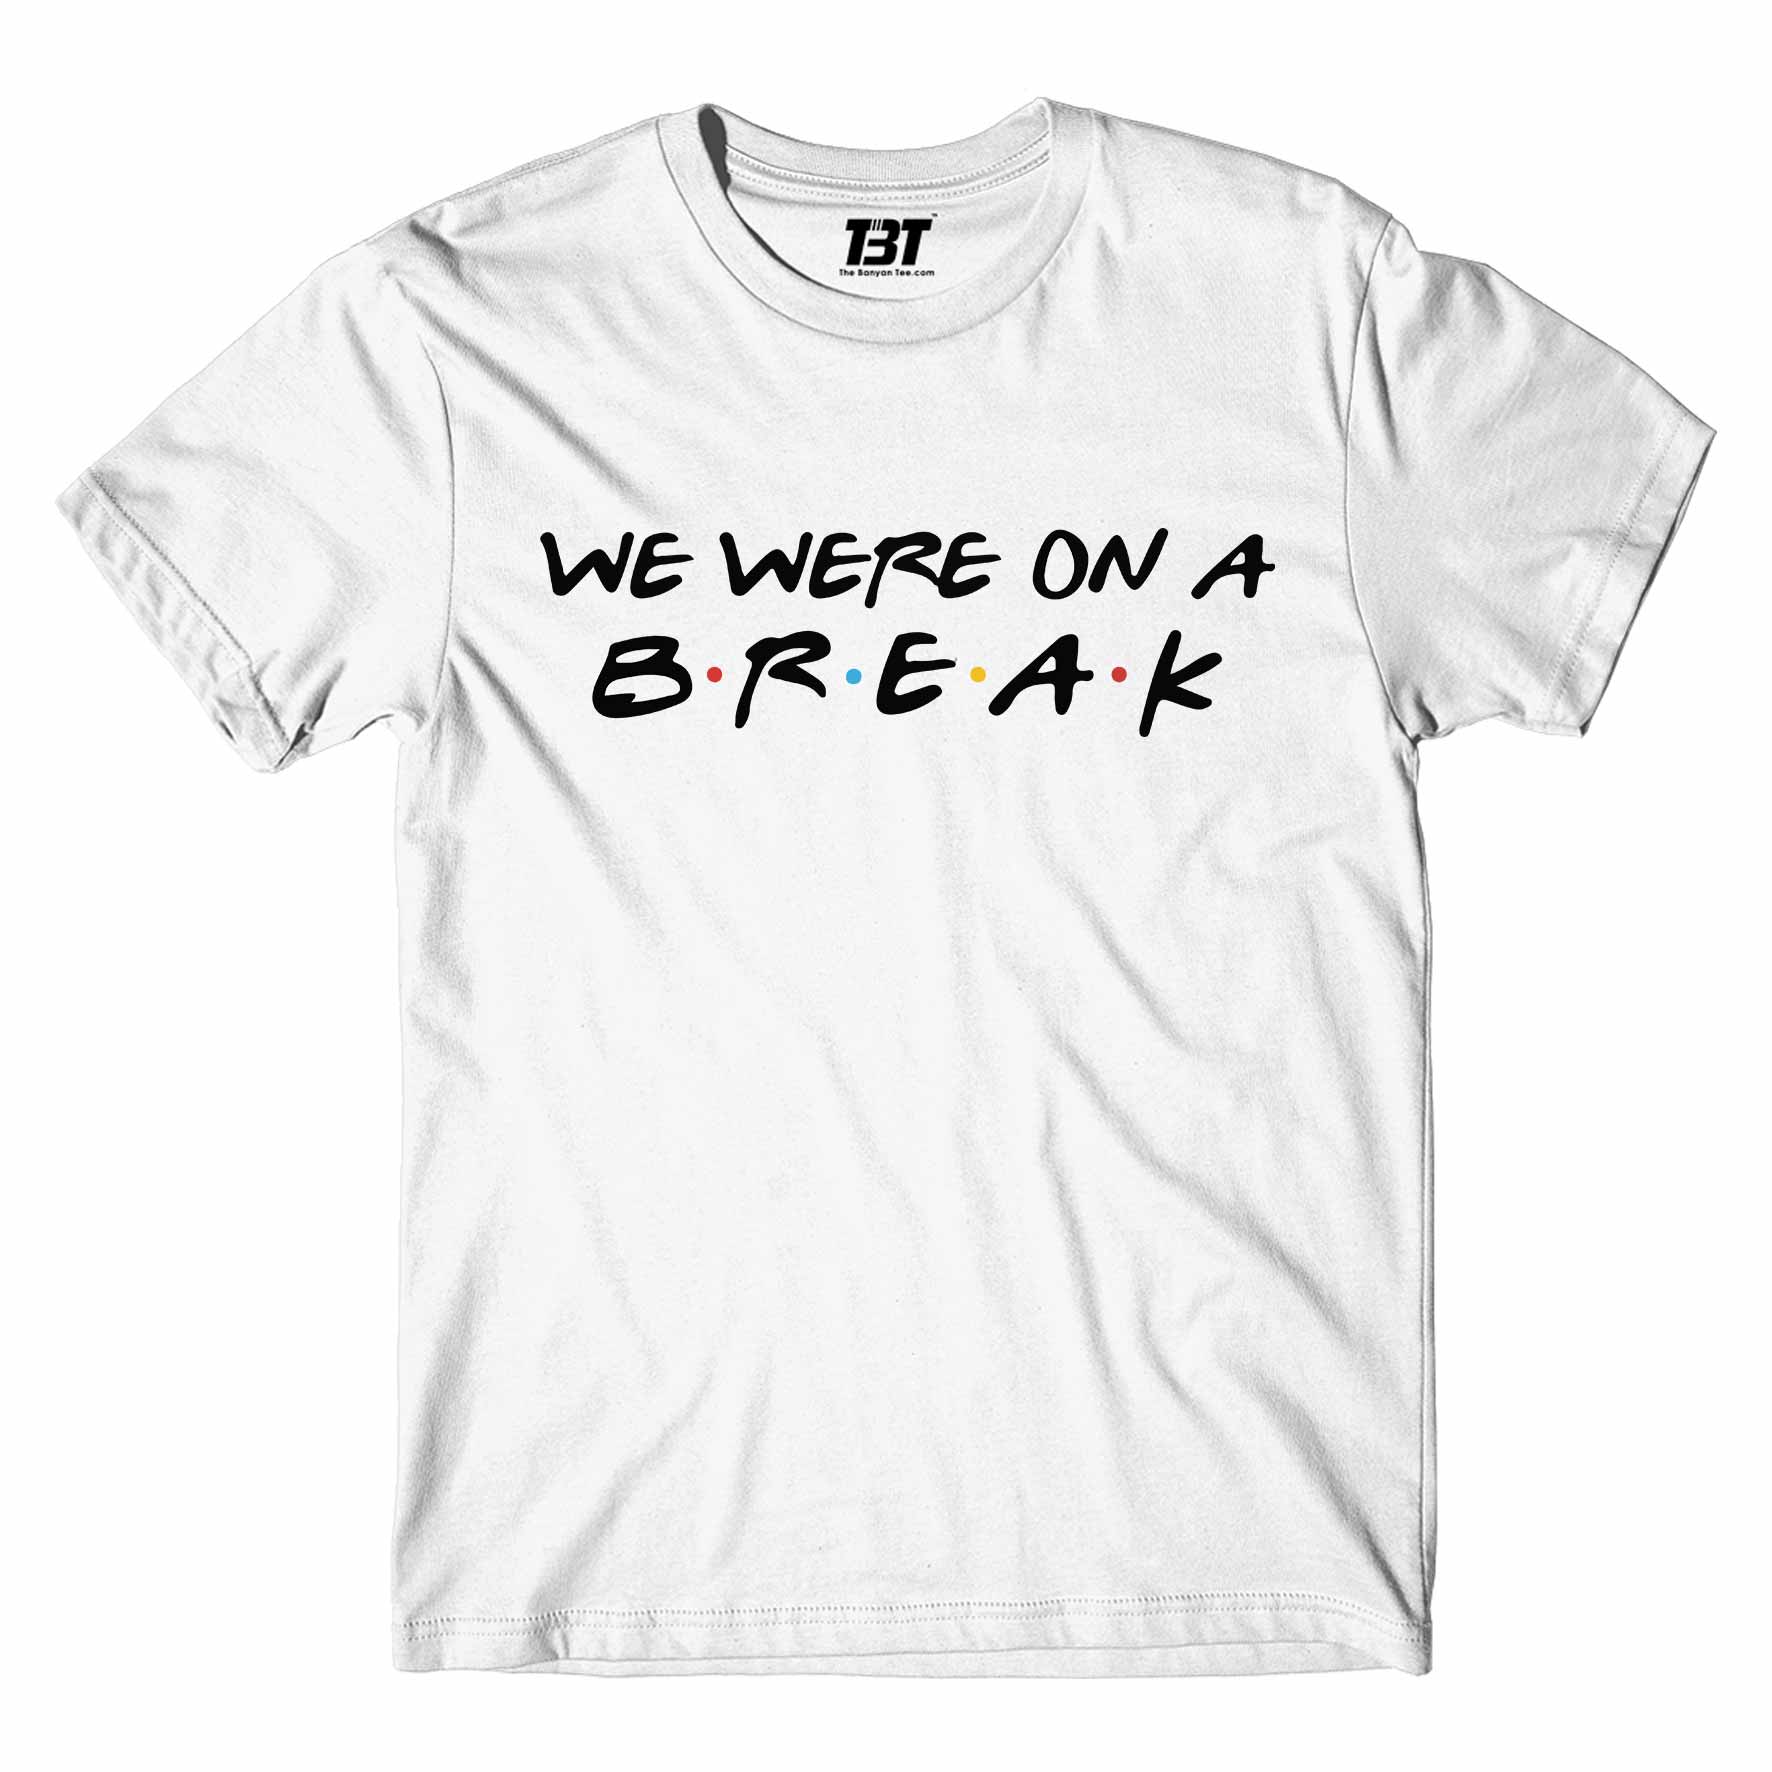 Friends T-shirt - We Were On A Break by The Banyan Tee TBT